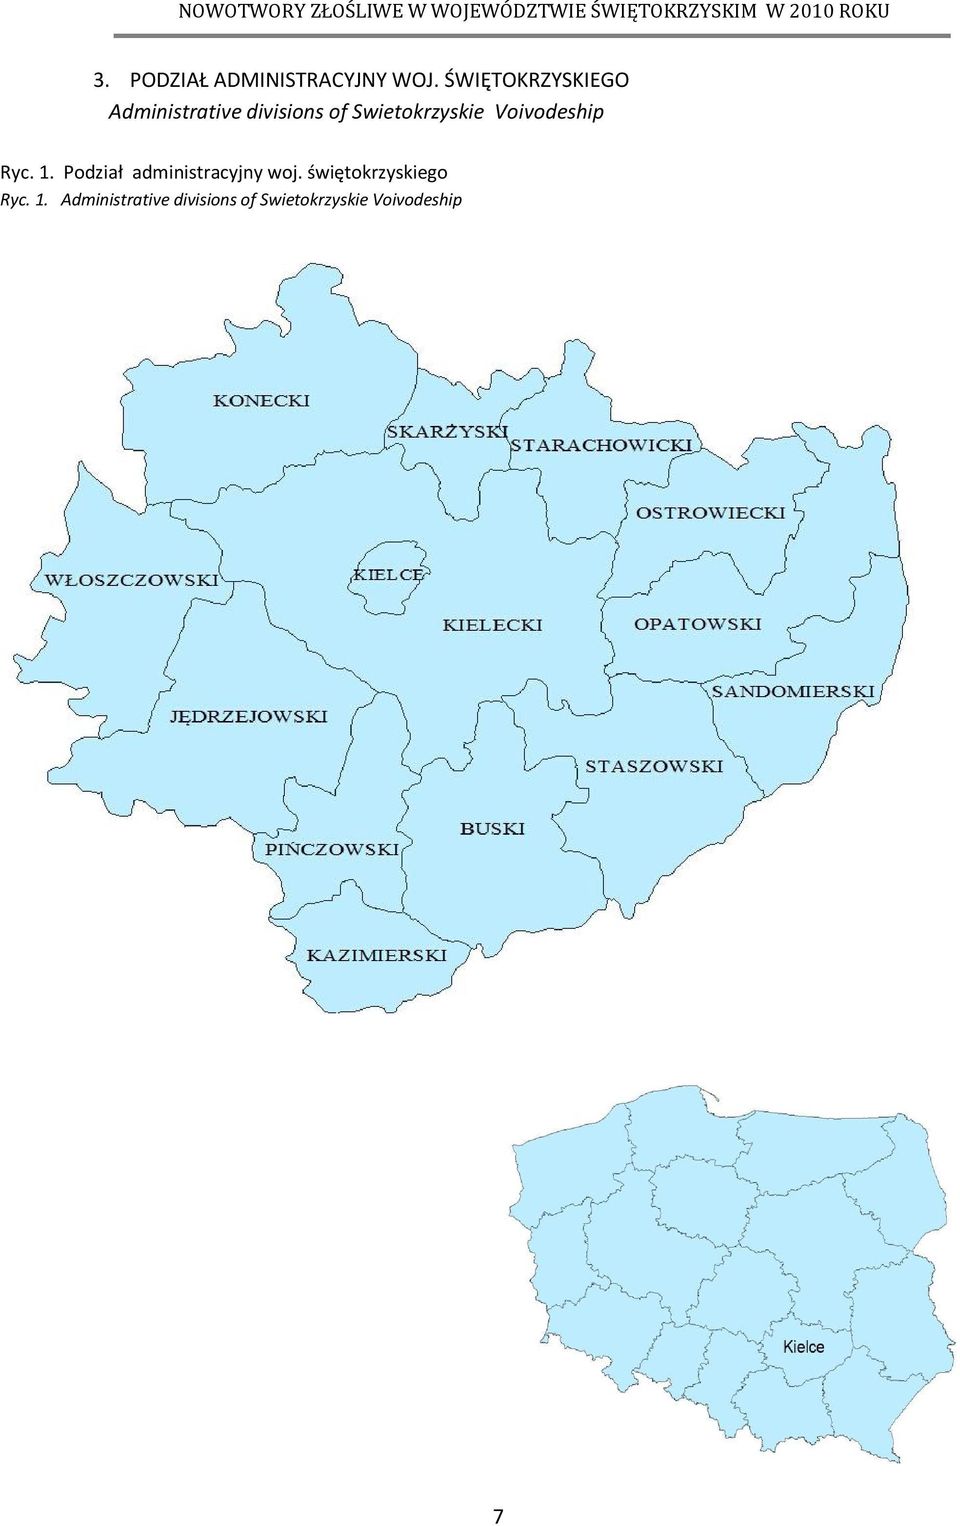 Swietokrzyskie Voivodeship Ryc. 1.